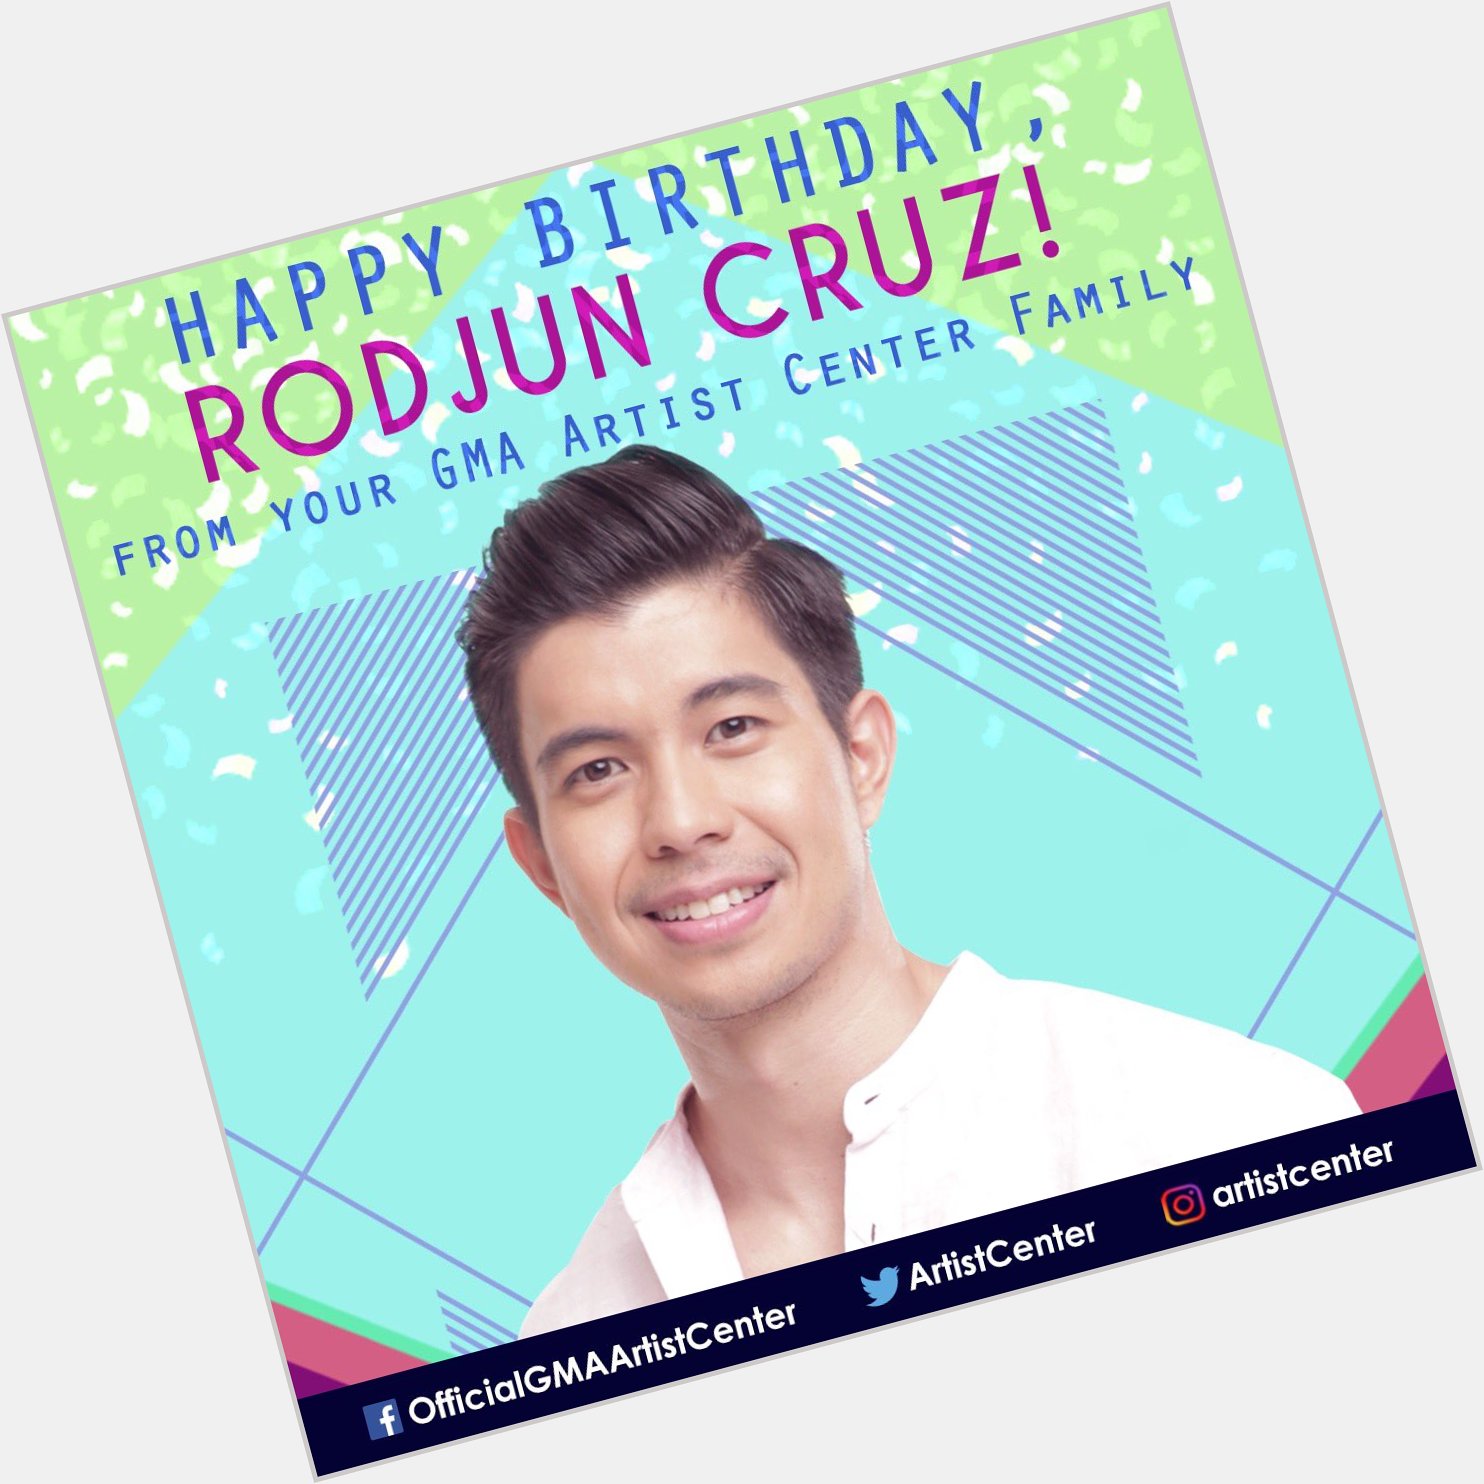 Happy Birthday, Rodjun Cruz! We hope all your birthday wishes come true!        